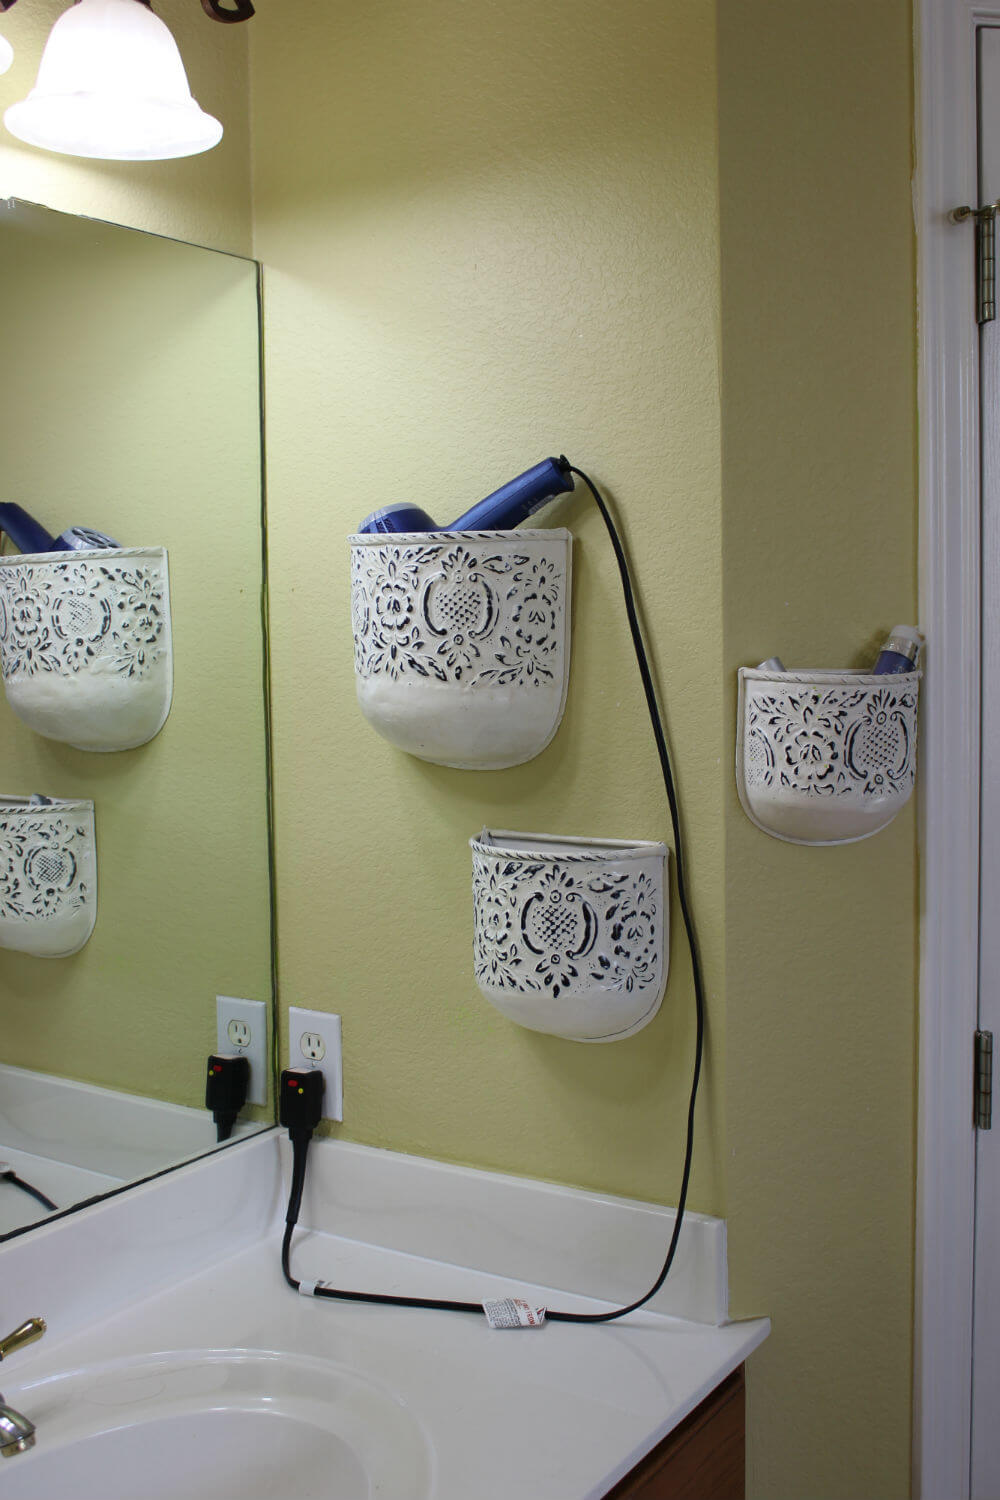 Hair drier holders | Best Small Bathroom Storage Designs & Ideas